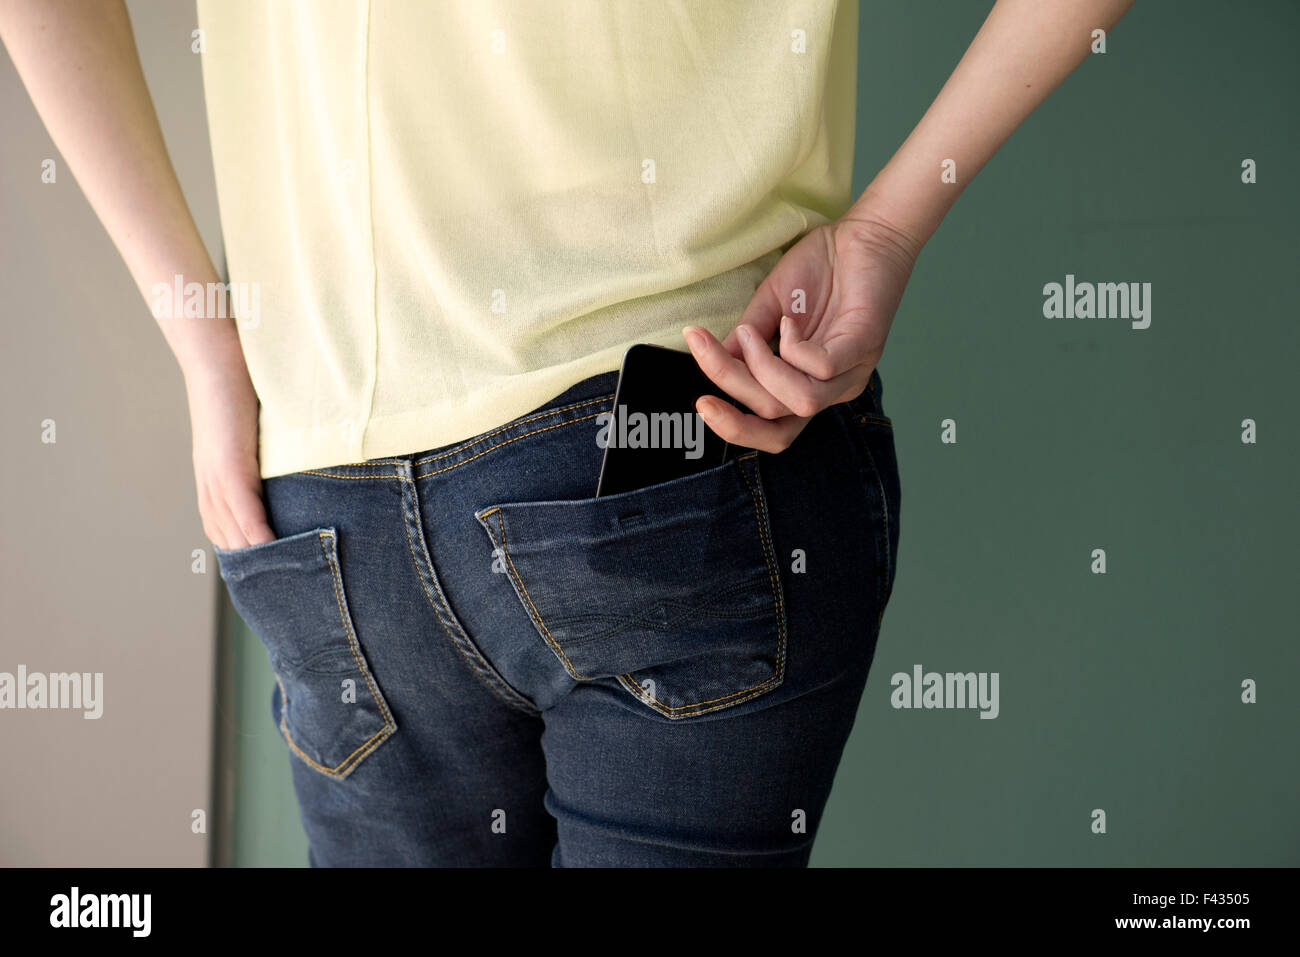 Mujer colocando teléfono celular en el bolsillo posterior